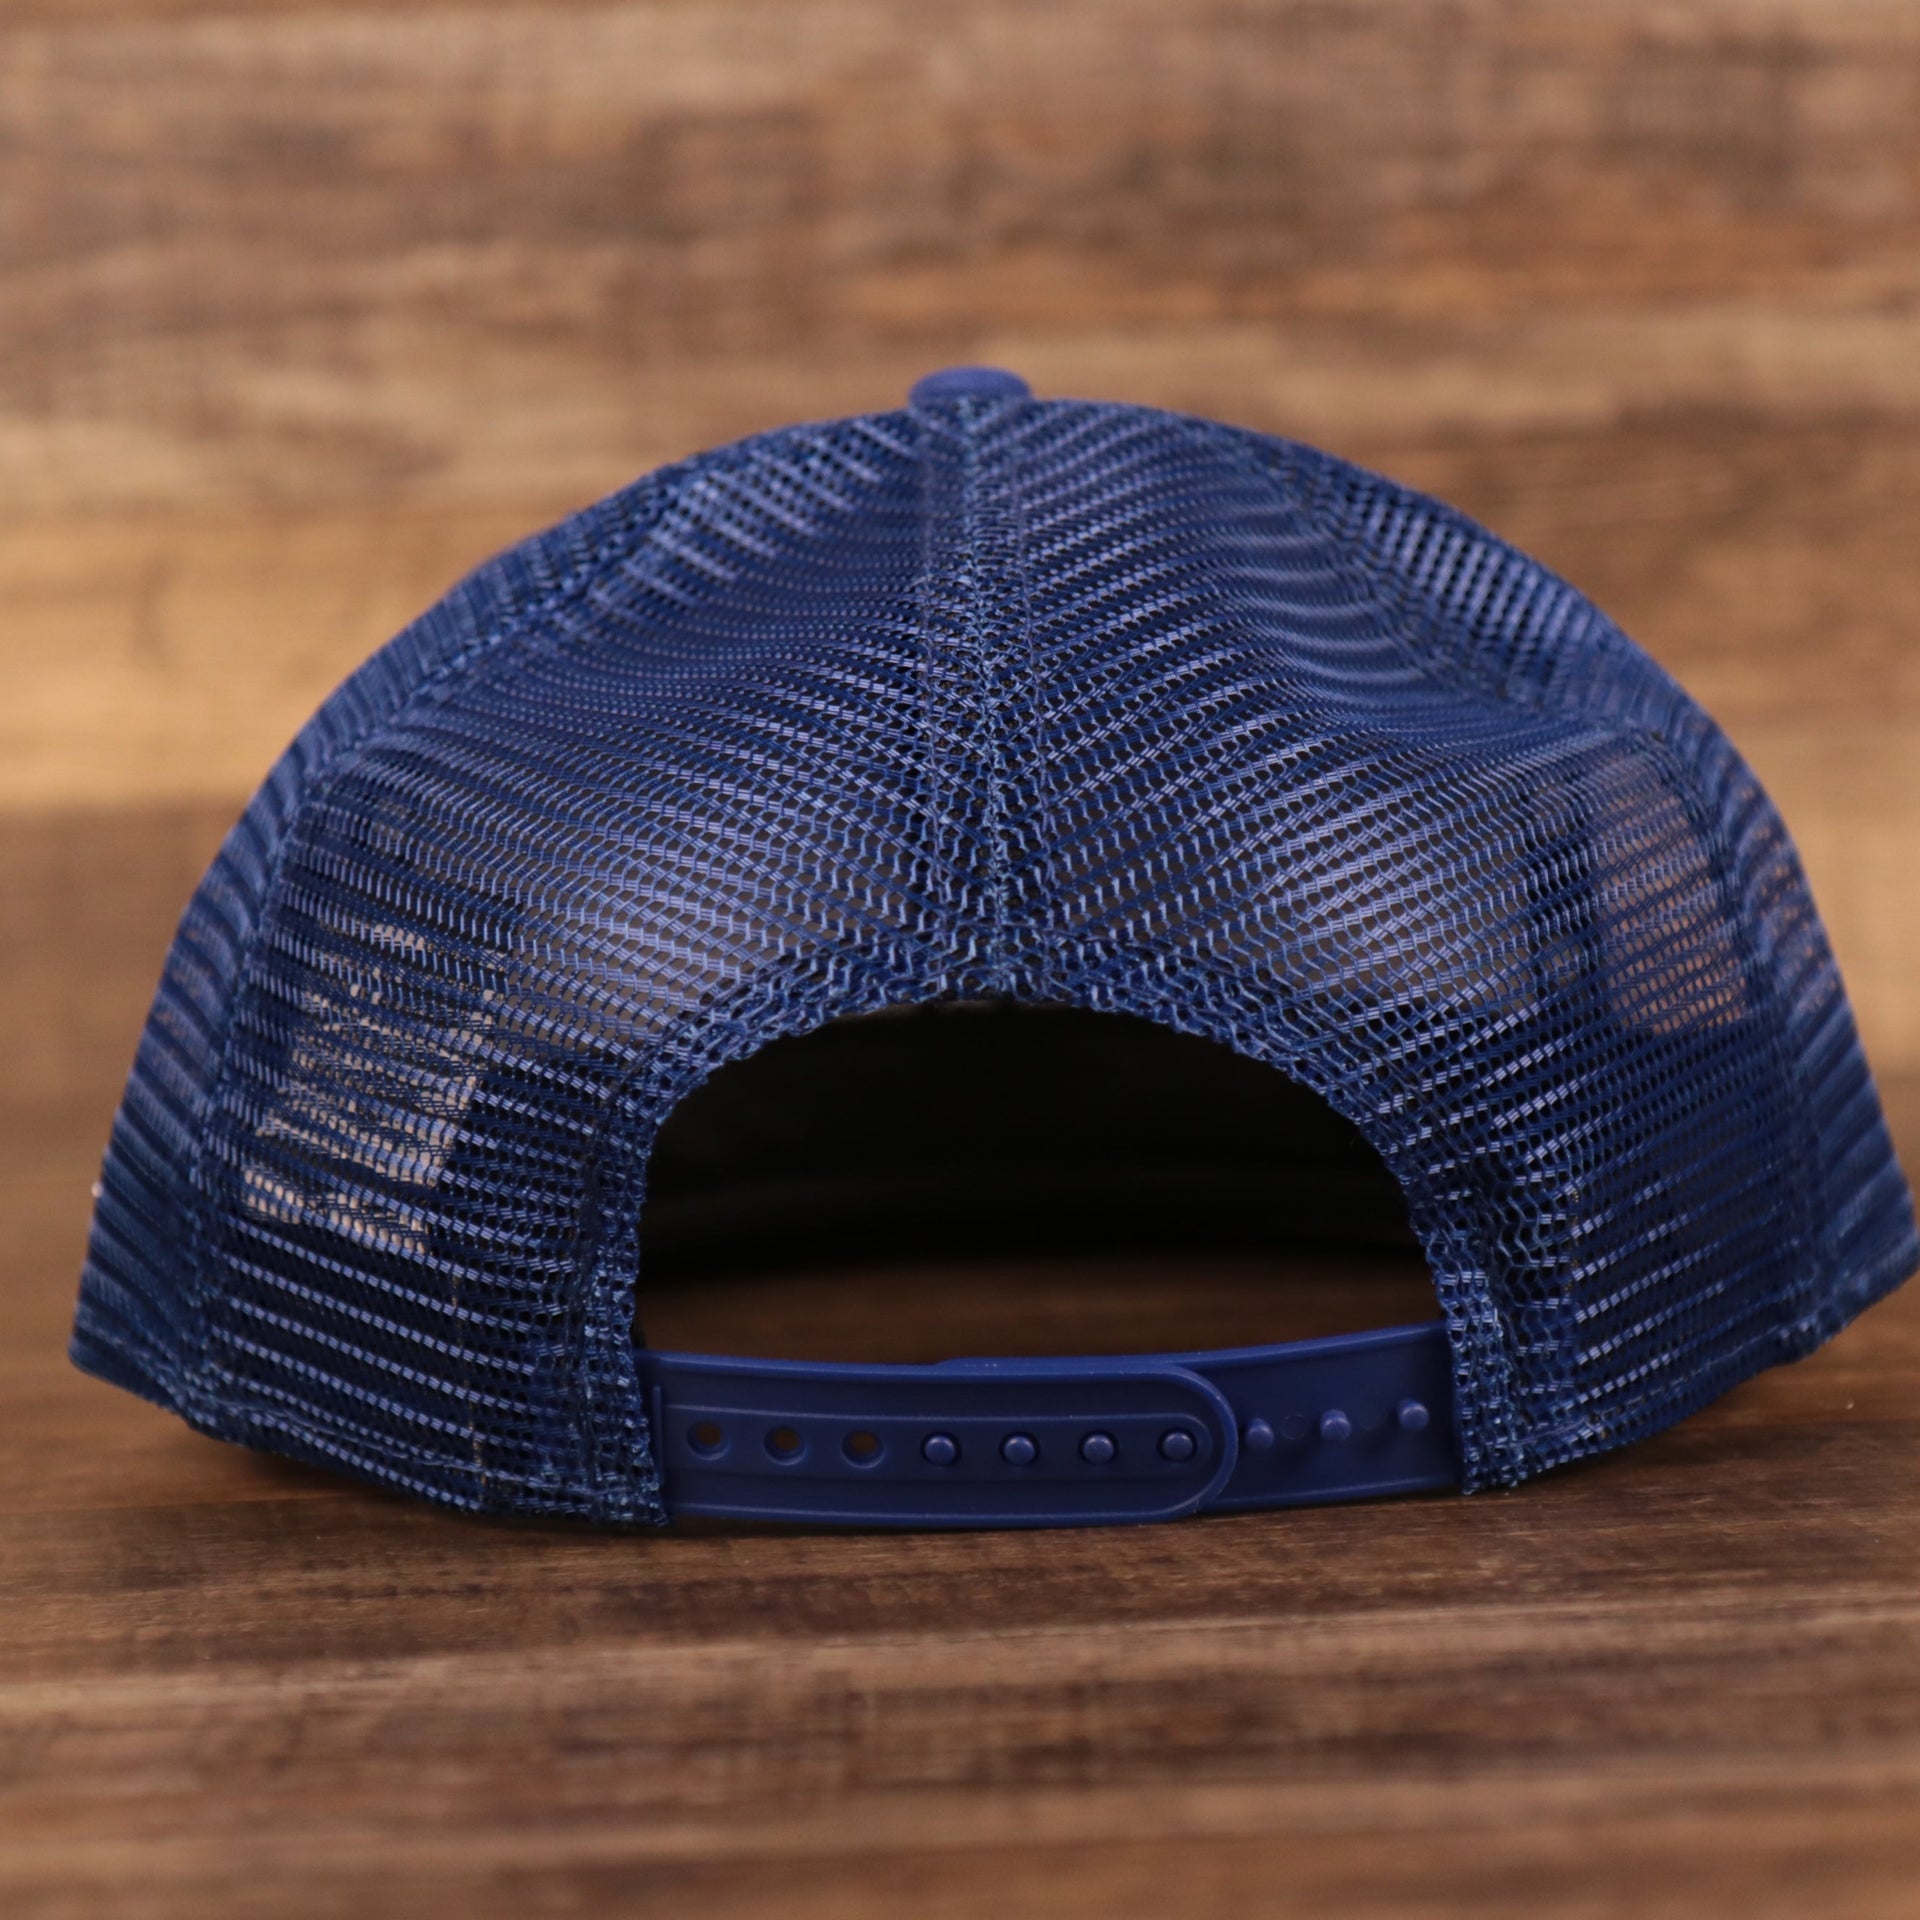 The adjustable strap on the backside of the Philadelphia 76ers royal blue mesh 9twenty snapback hat.